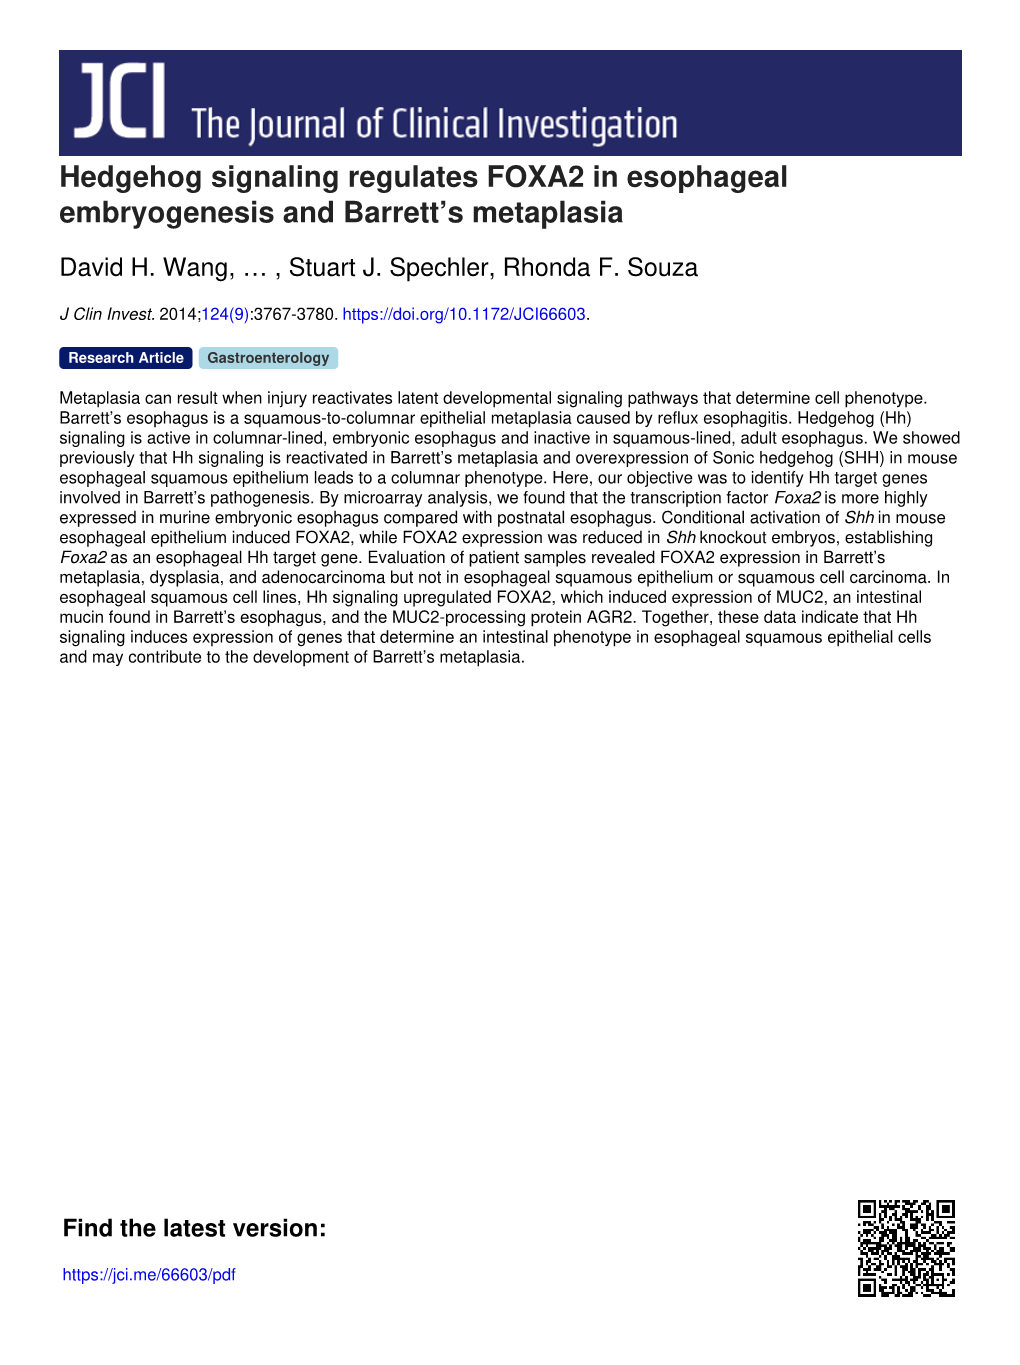 Hedgehog Signaling Regulates FOXA2 in Esophageal Embryogenesis and Barrett’S Metaplasia